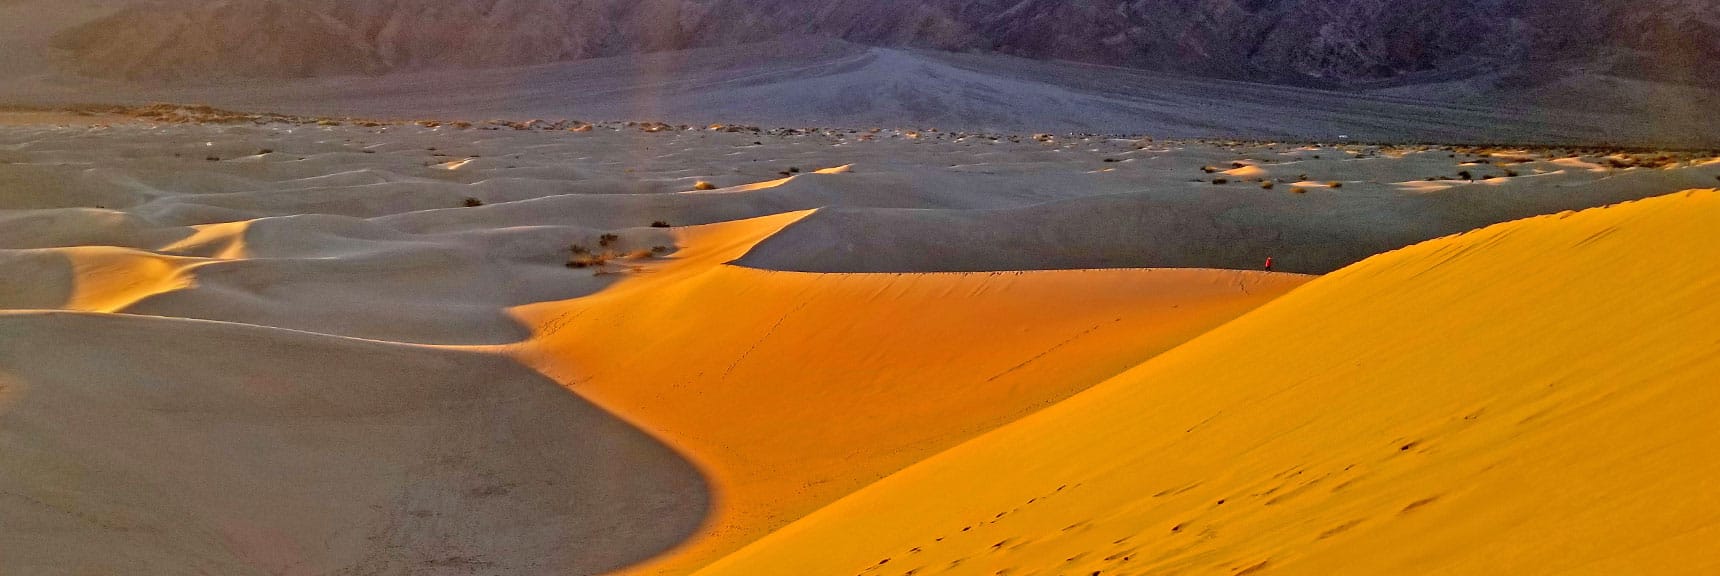 View Southwest | Mesquite Sand Dunes Sunrise | Death Valley National Park, California